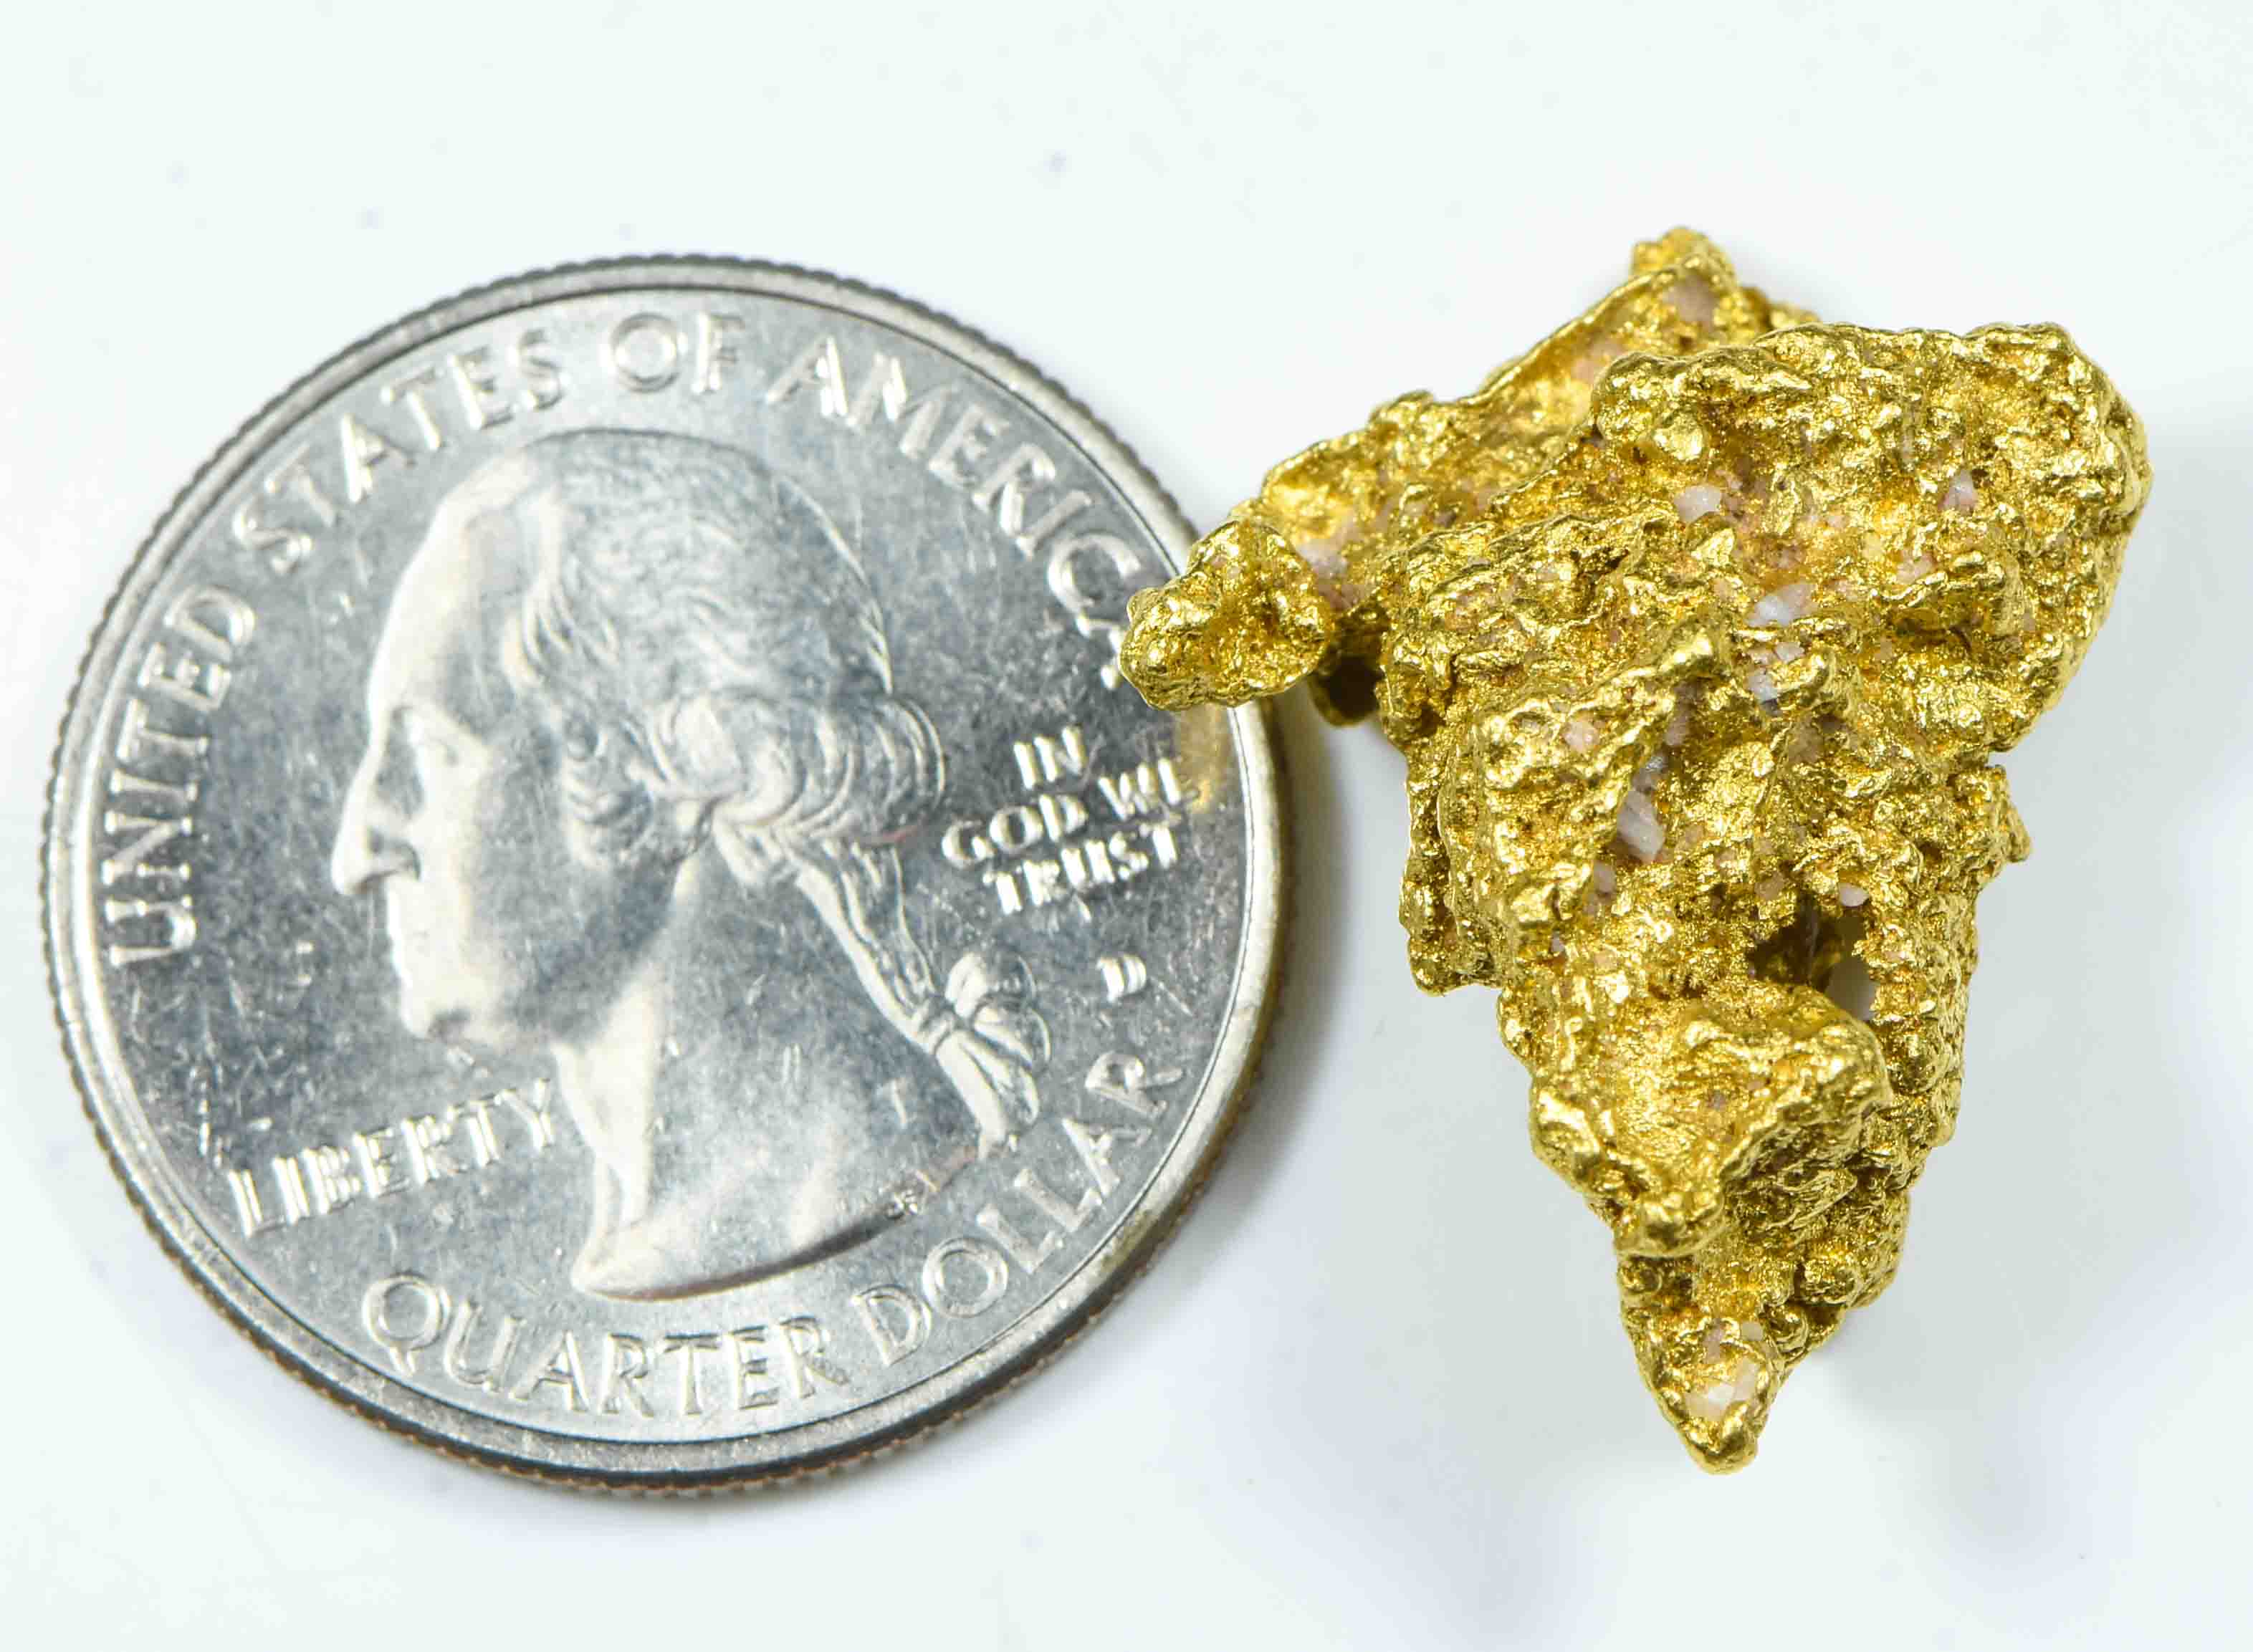 #1084 Natural Gold Nugget Australian 9.93 Grams Genuine